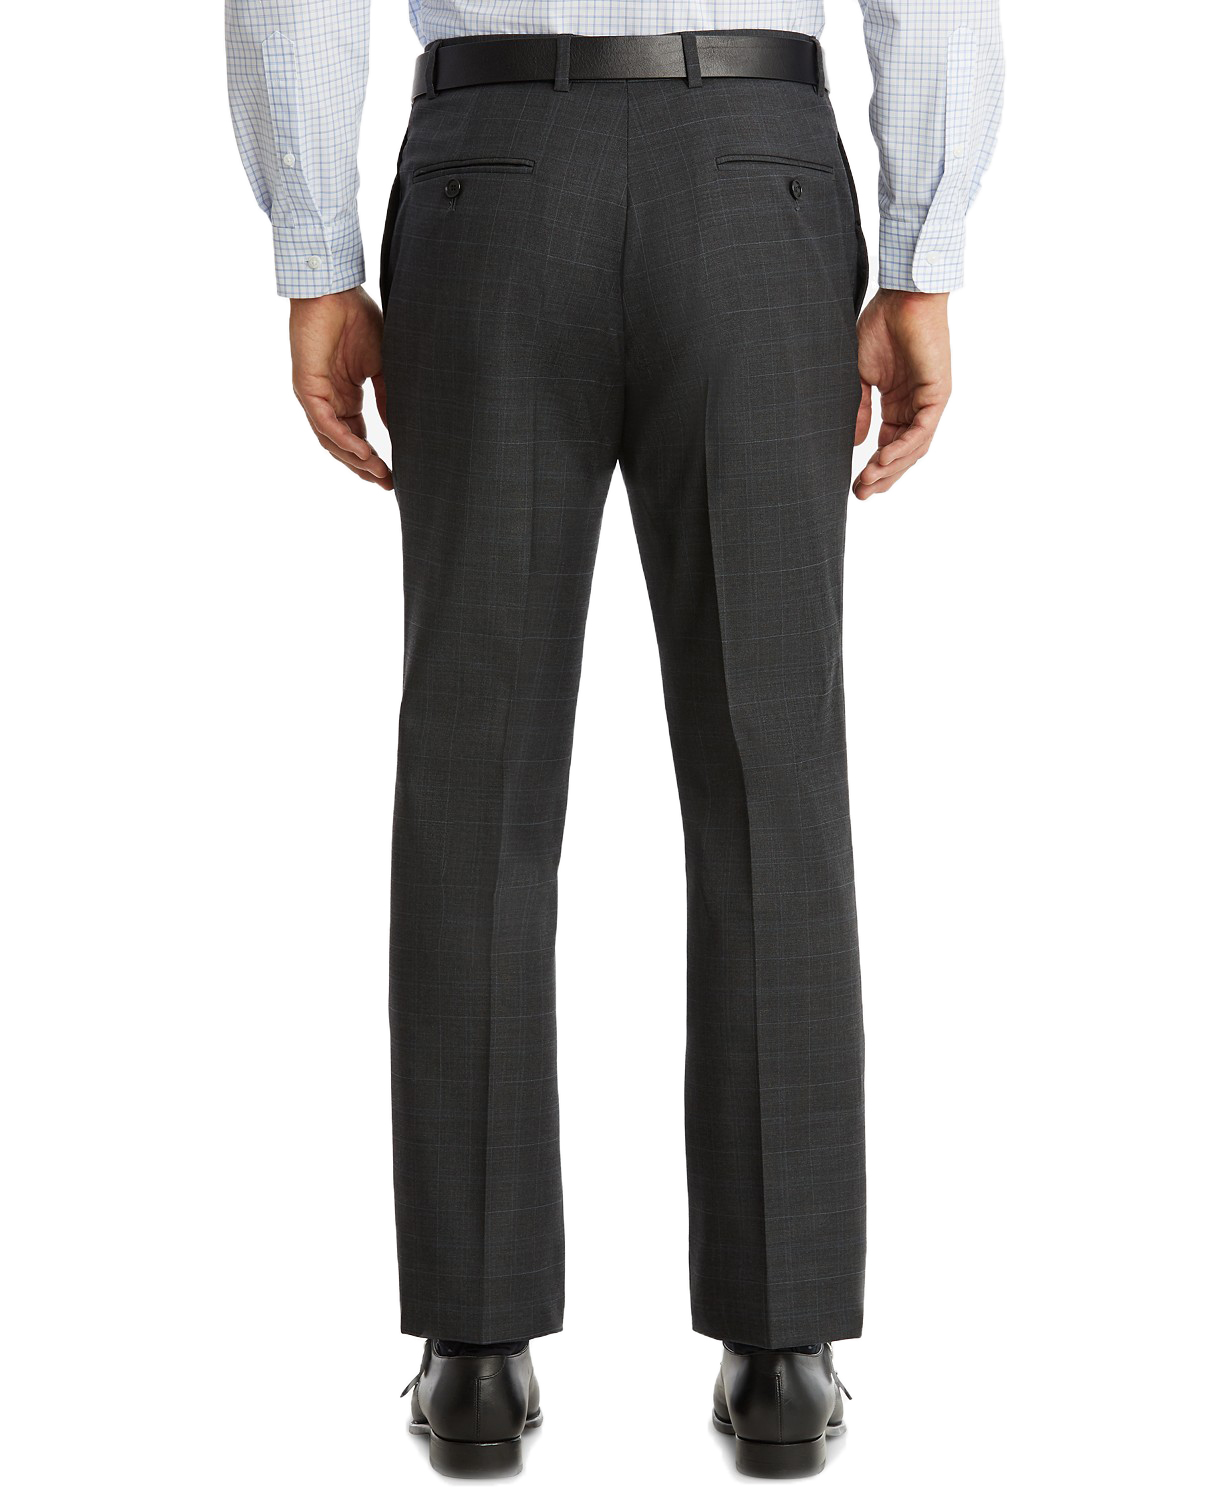 www.couturepoint.com-tommy-hilfiger-mens-grey-wool-blend-modern-fit-th-flex-performance-plaid-suit-pants